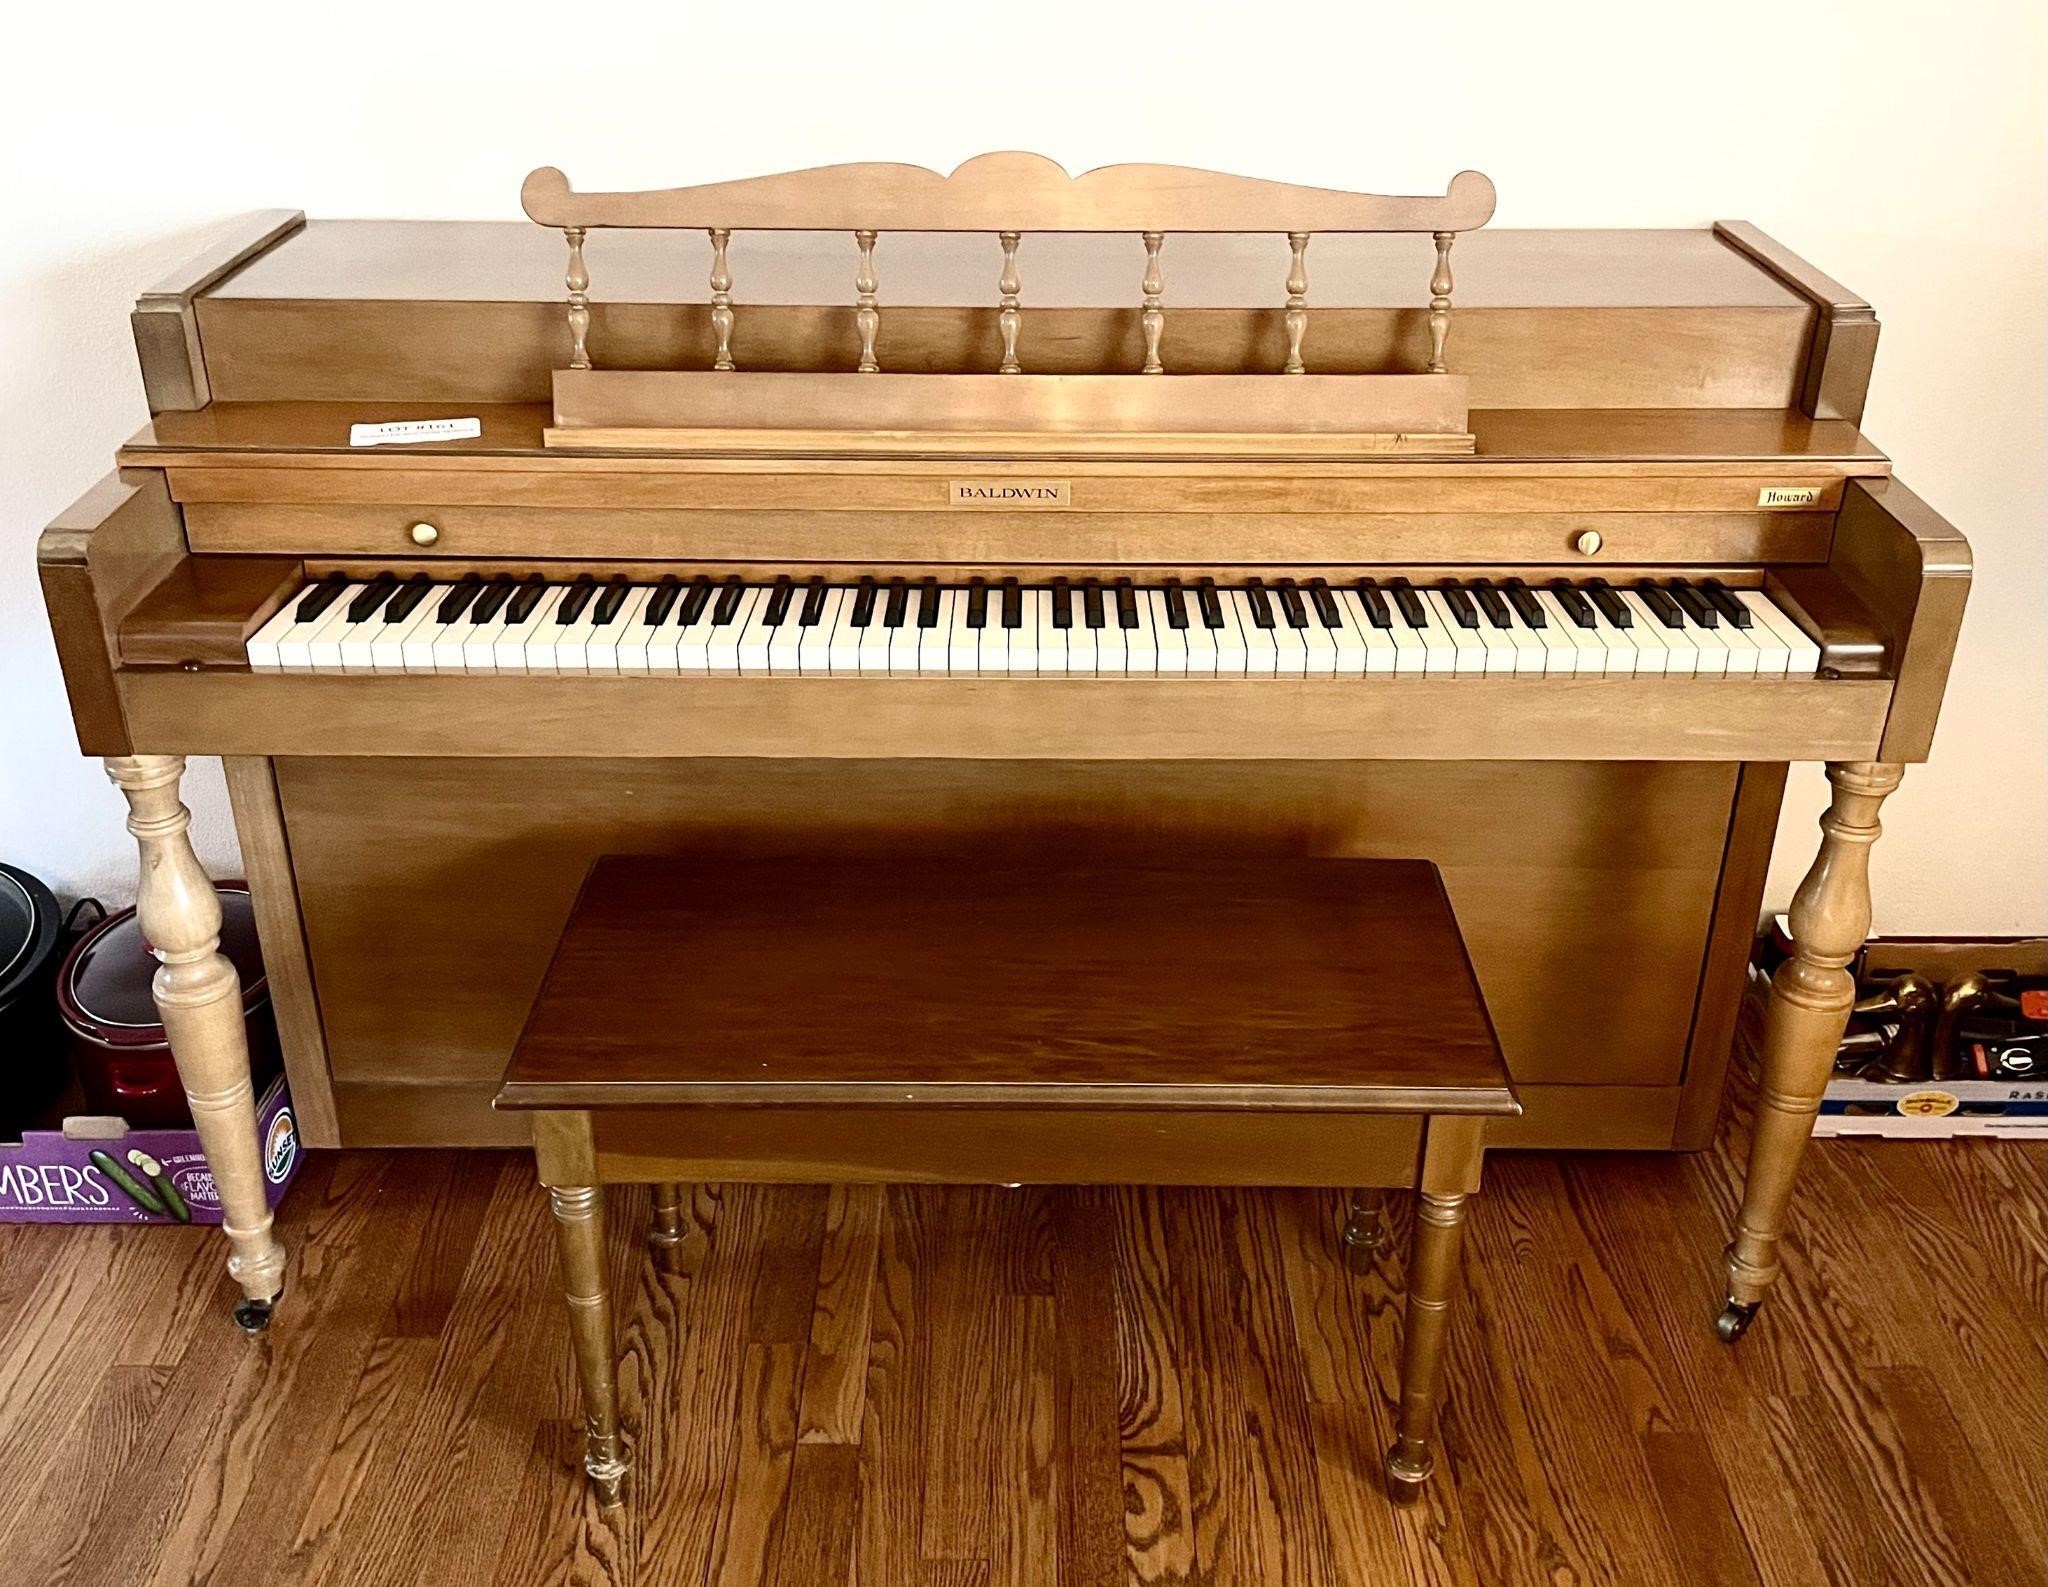 Baldwin Howard spinet piano, bench, and music